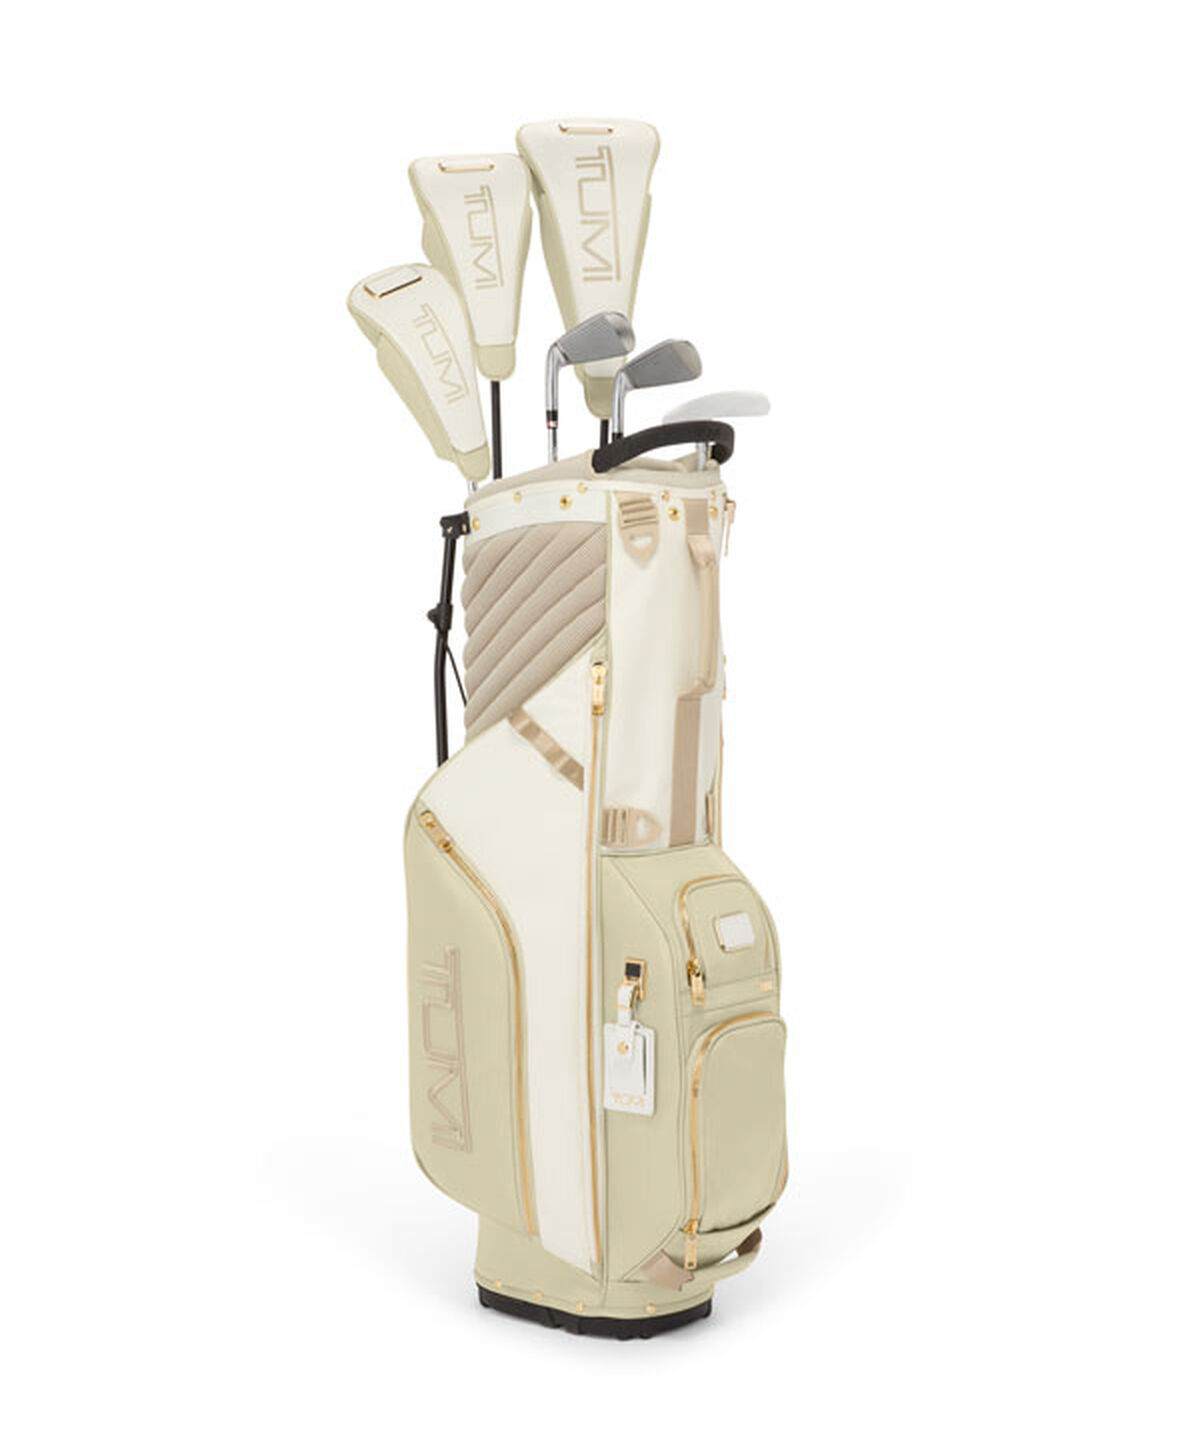 TUMI Golf Stand Bag